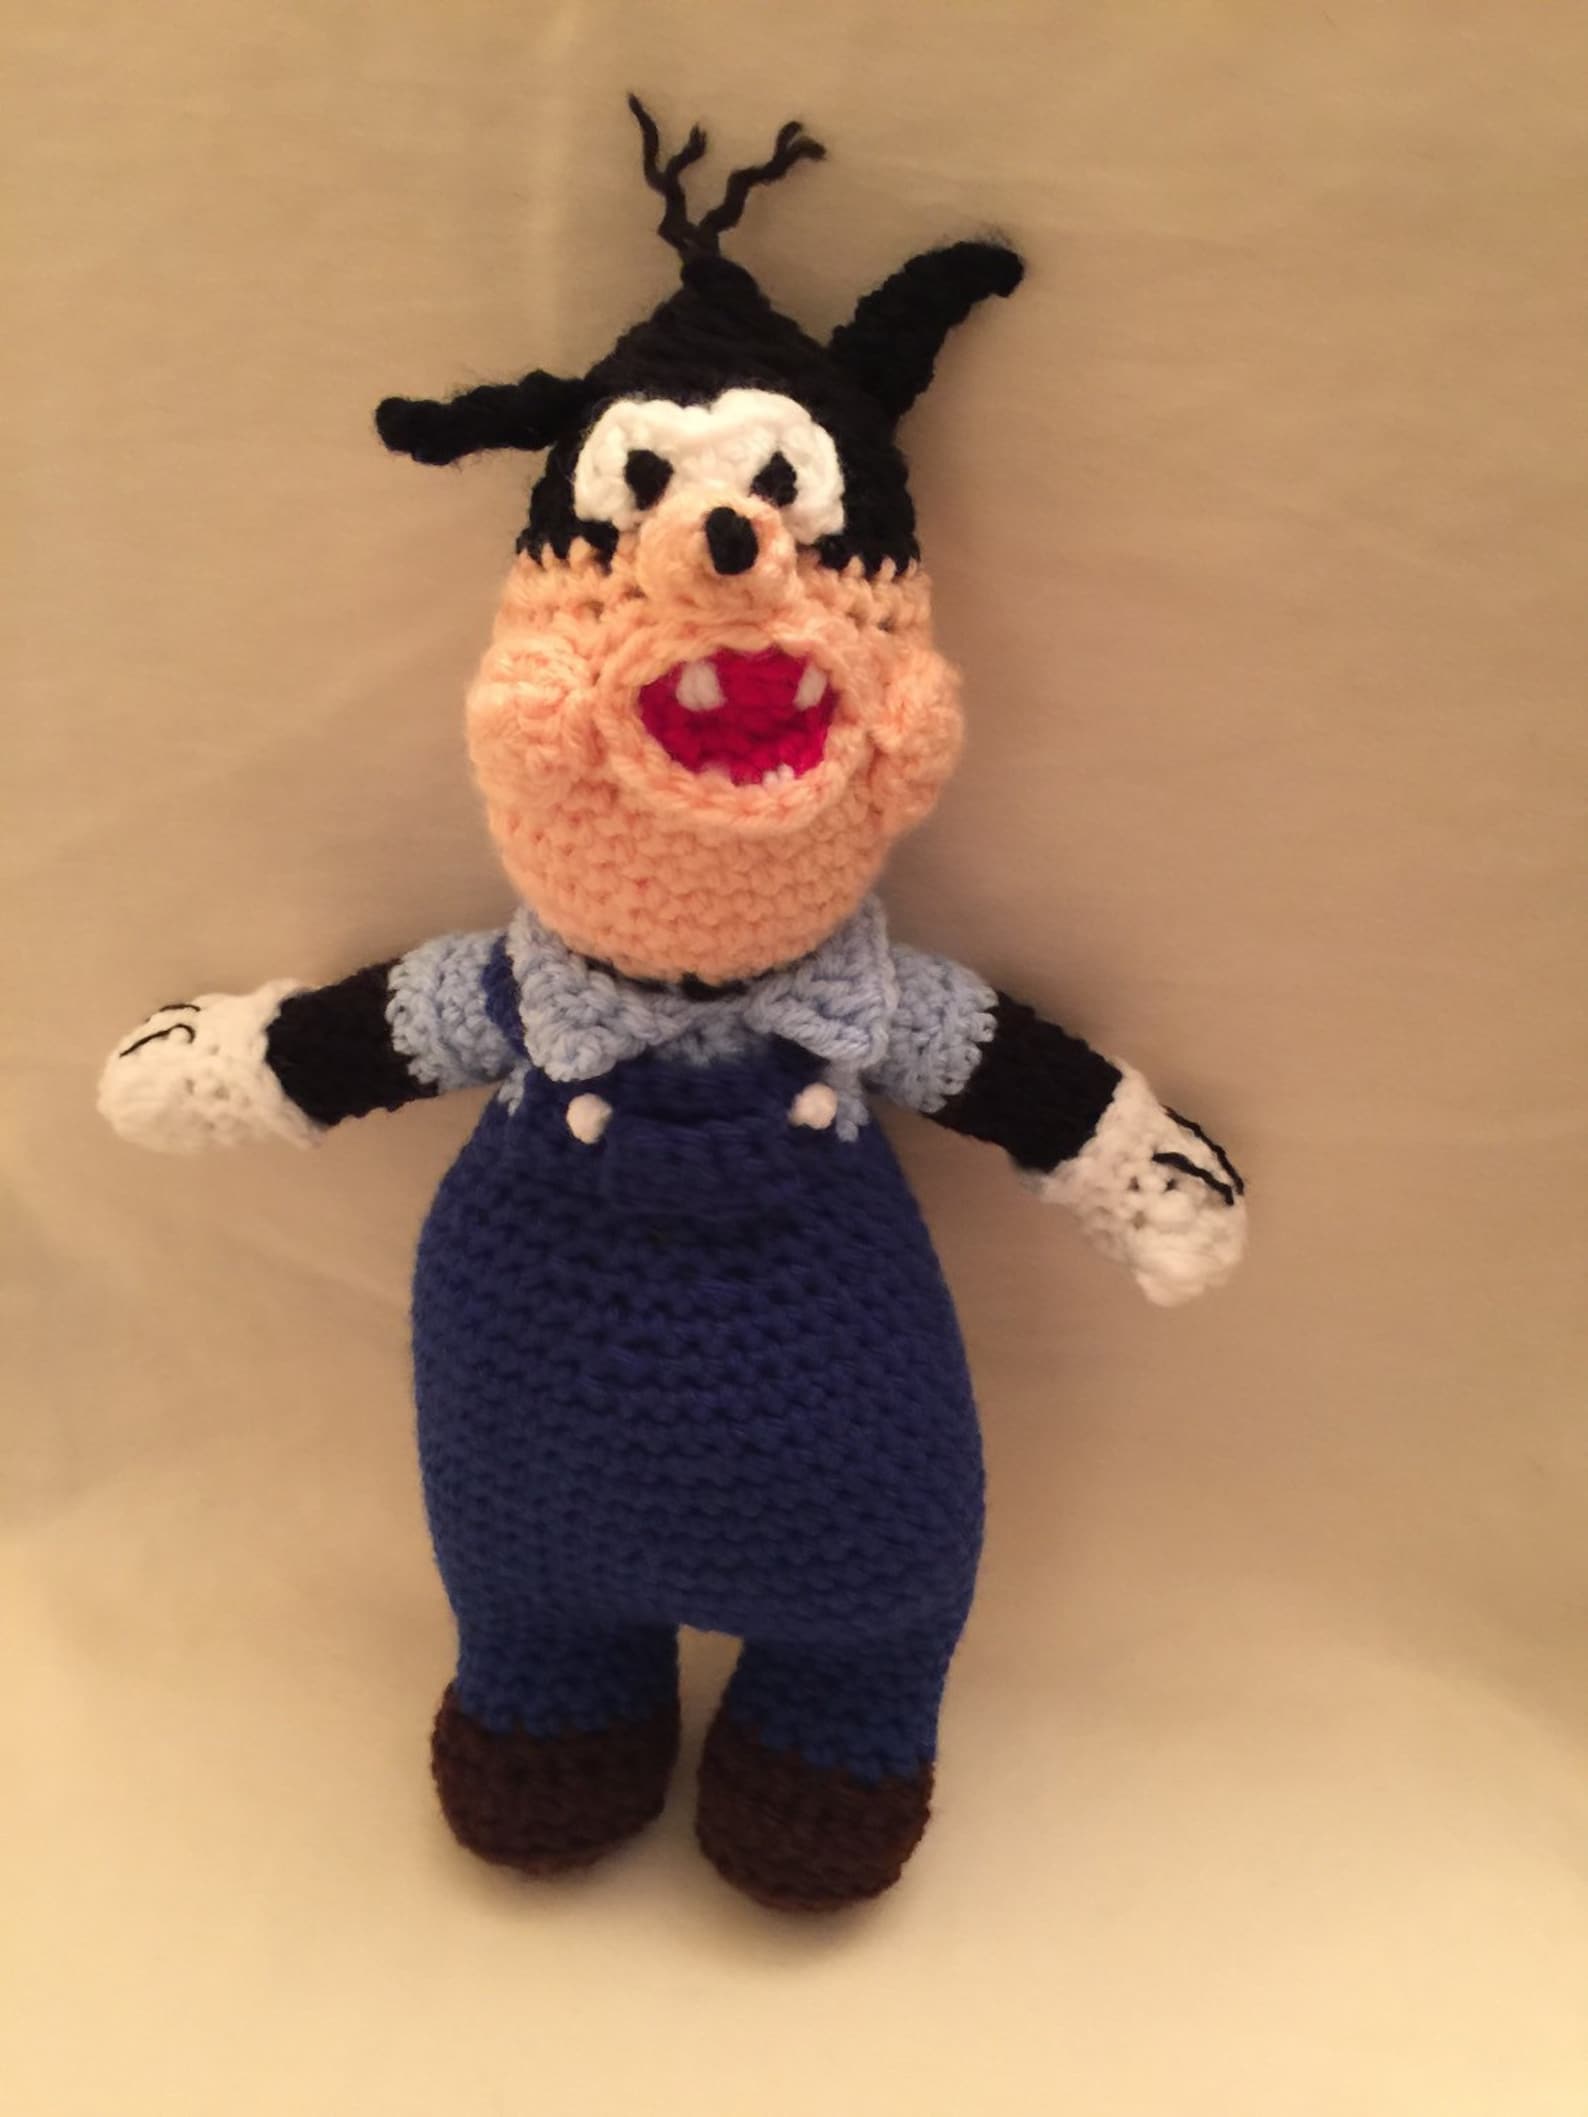 Pete Stuffed Animal Inspired by Disney's mickey - Etsy